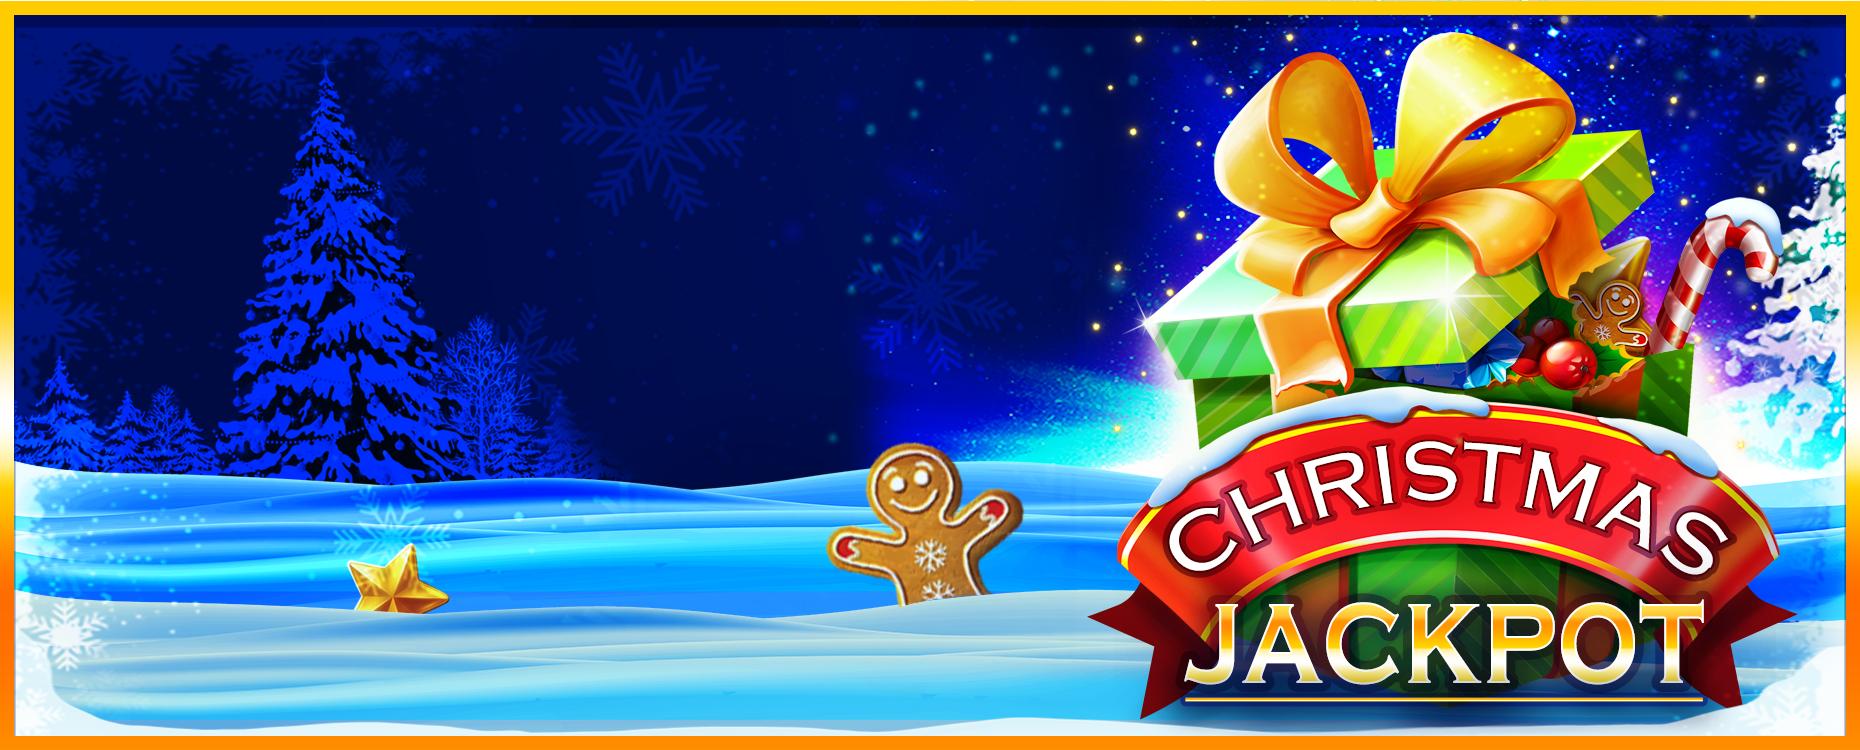 Christmas Jackpot | Promotion pack | Online slot